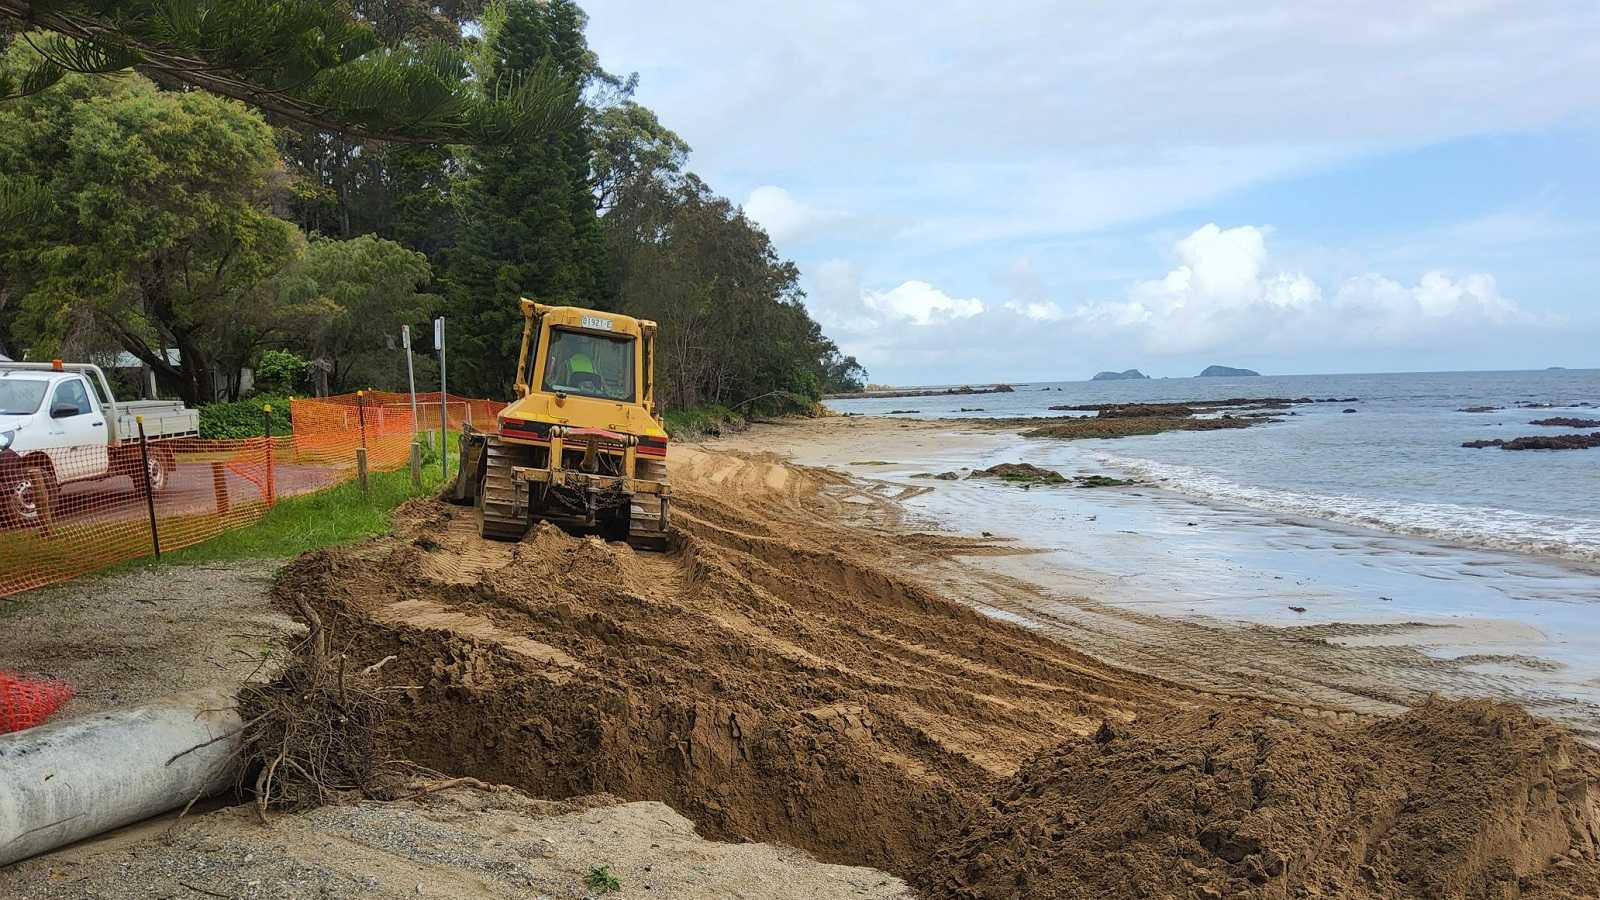 Image A bulldozer moves sand around a narrow beach next to a road.